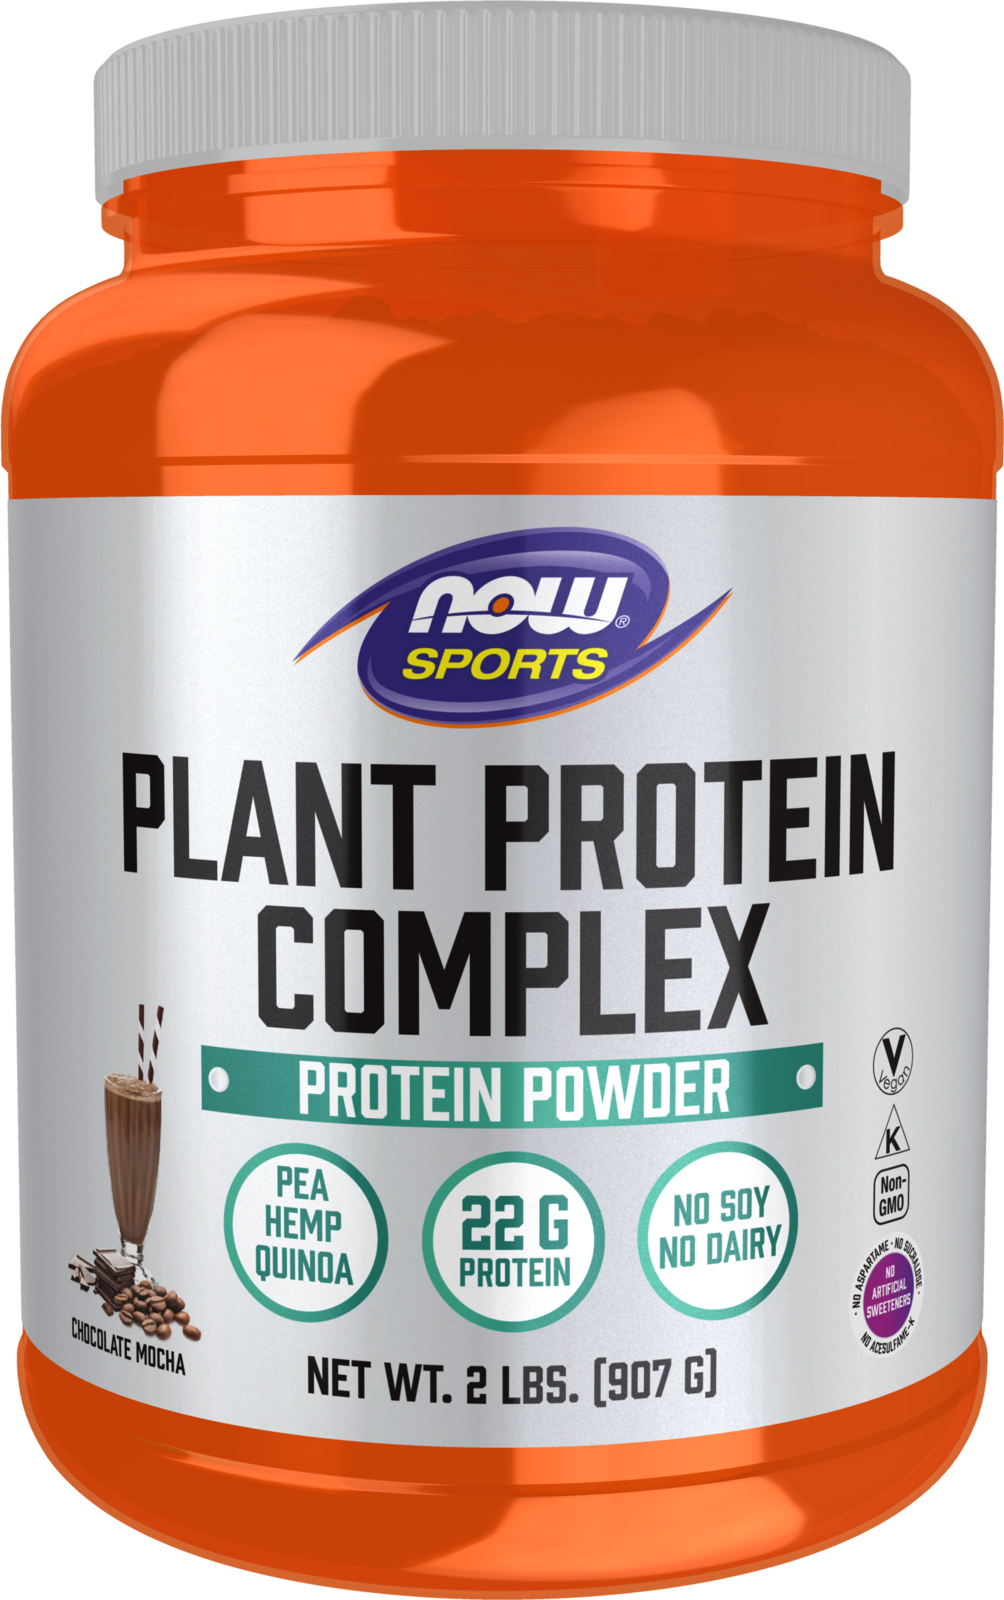 Plant Protein Complex, Chocolate Mocha Powder